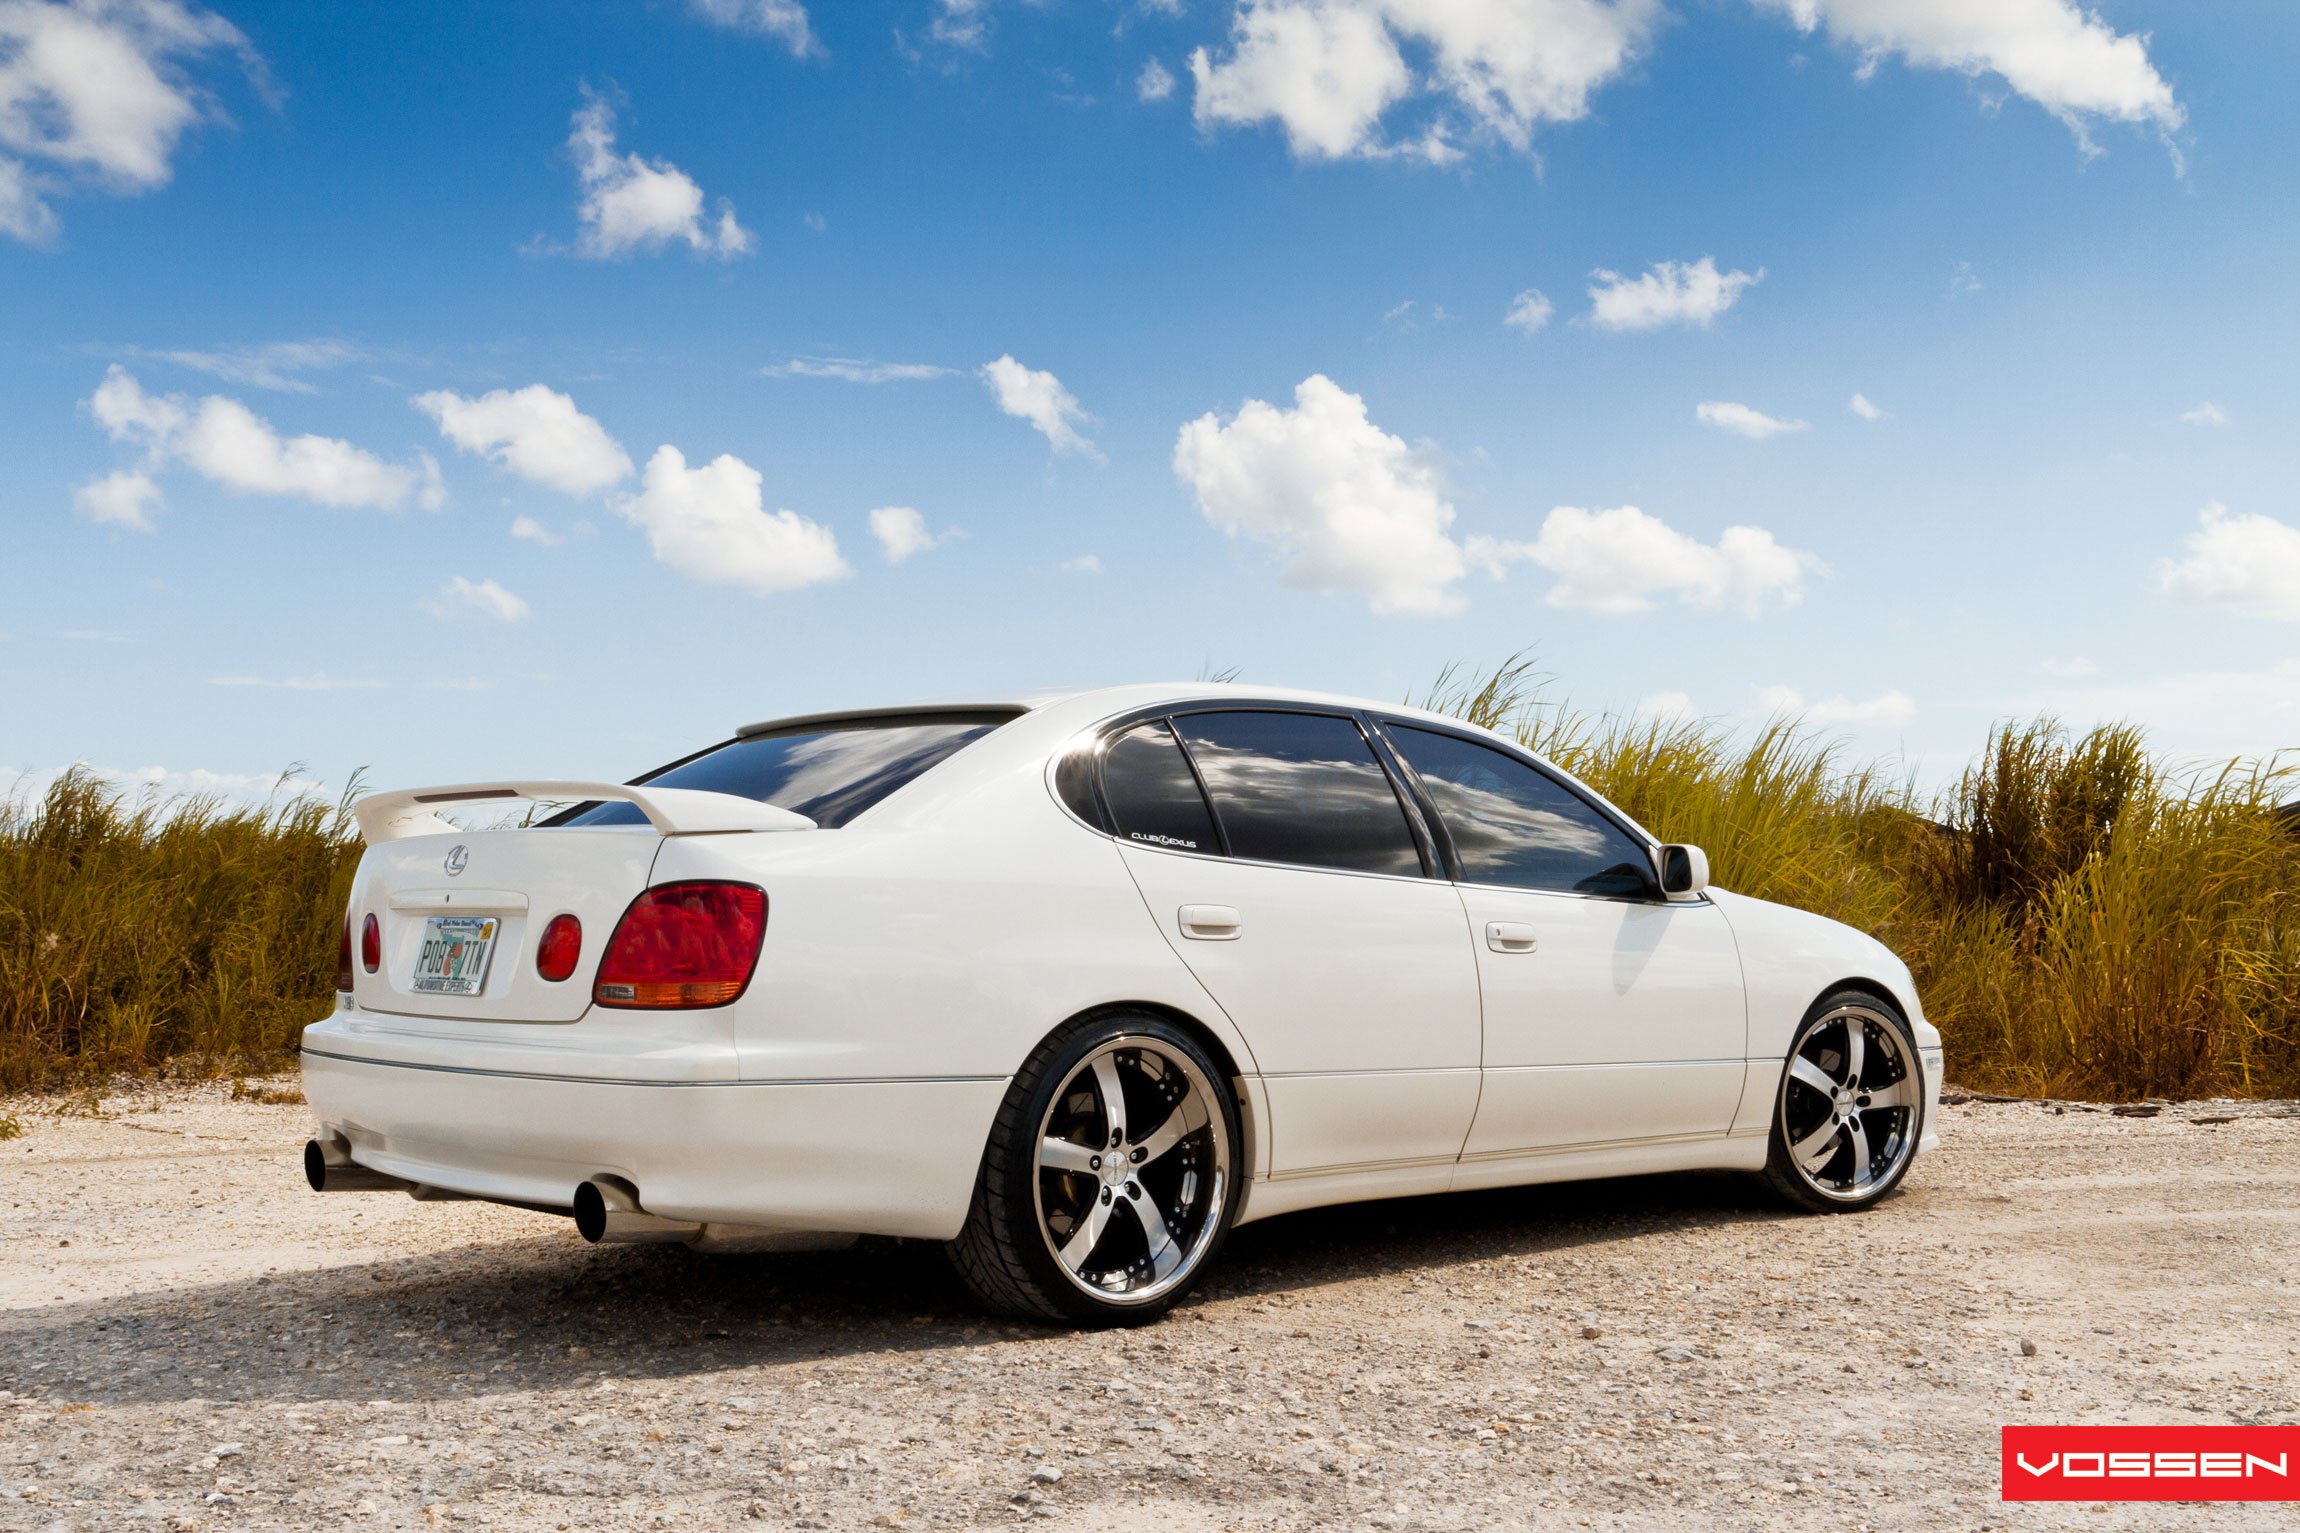 Custom Style Rear Spoiler on White Lexus GS - Photo by Vossen